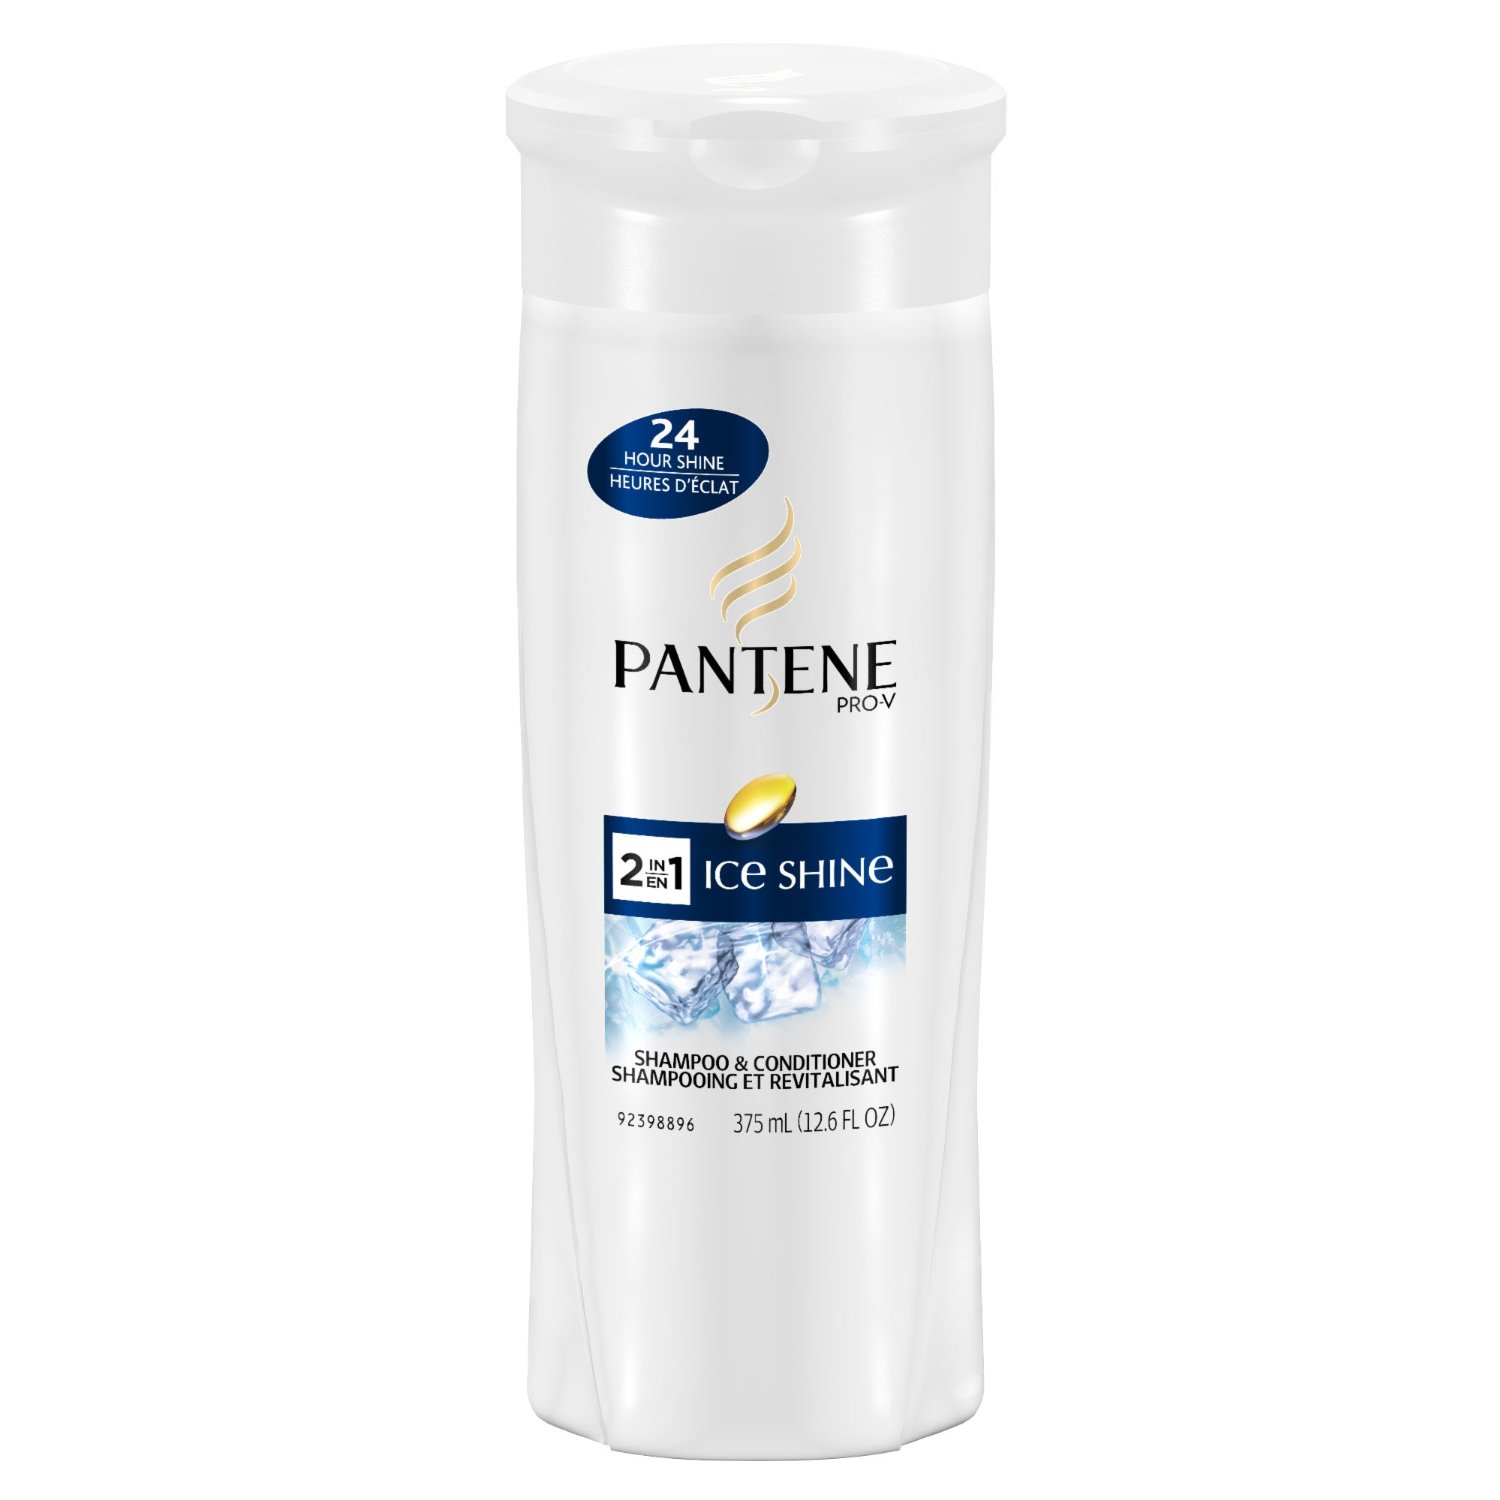 PANTENE潘婷 Ice Shine 洗髮露/護髮素 2合1 12.6盎司/瓶 共2瓶 點擊coupon后 $3.63免運費